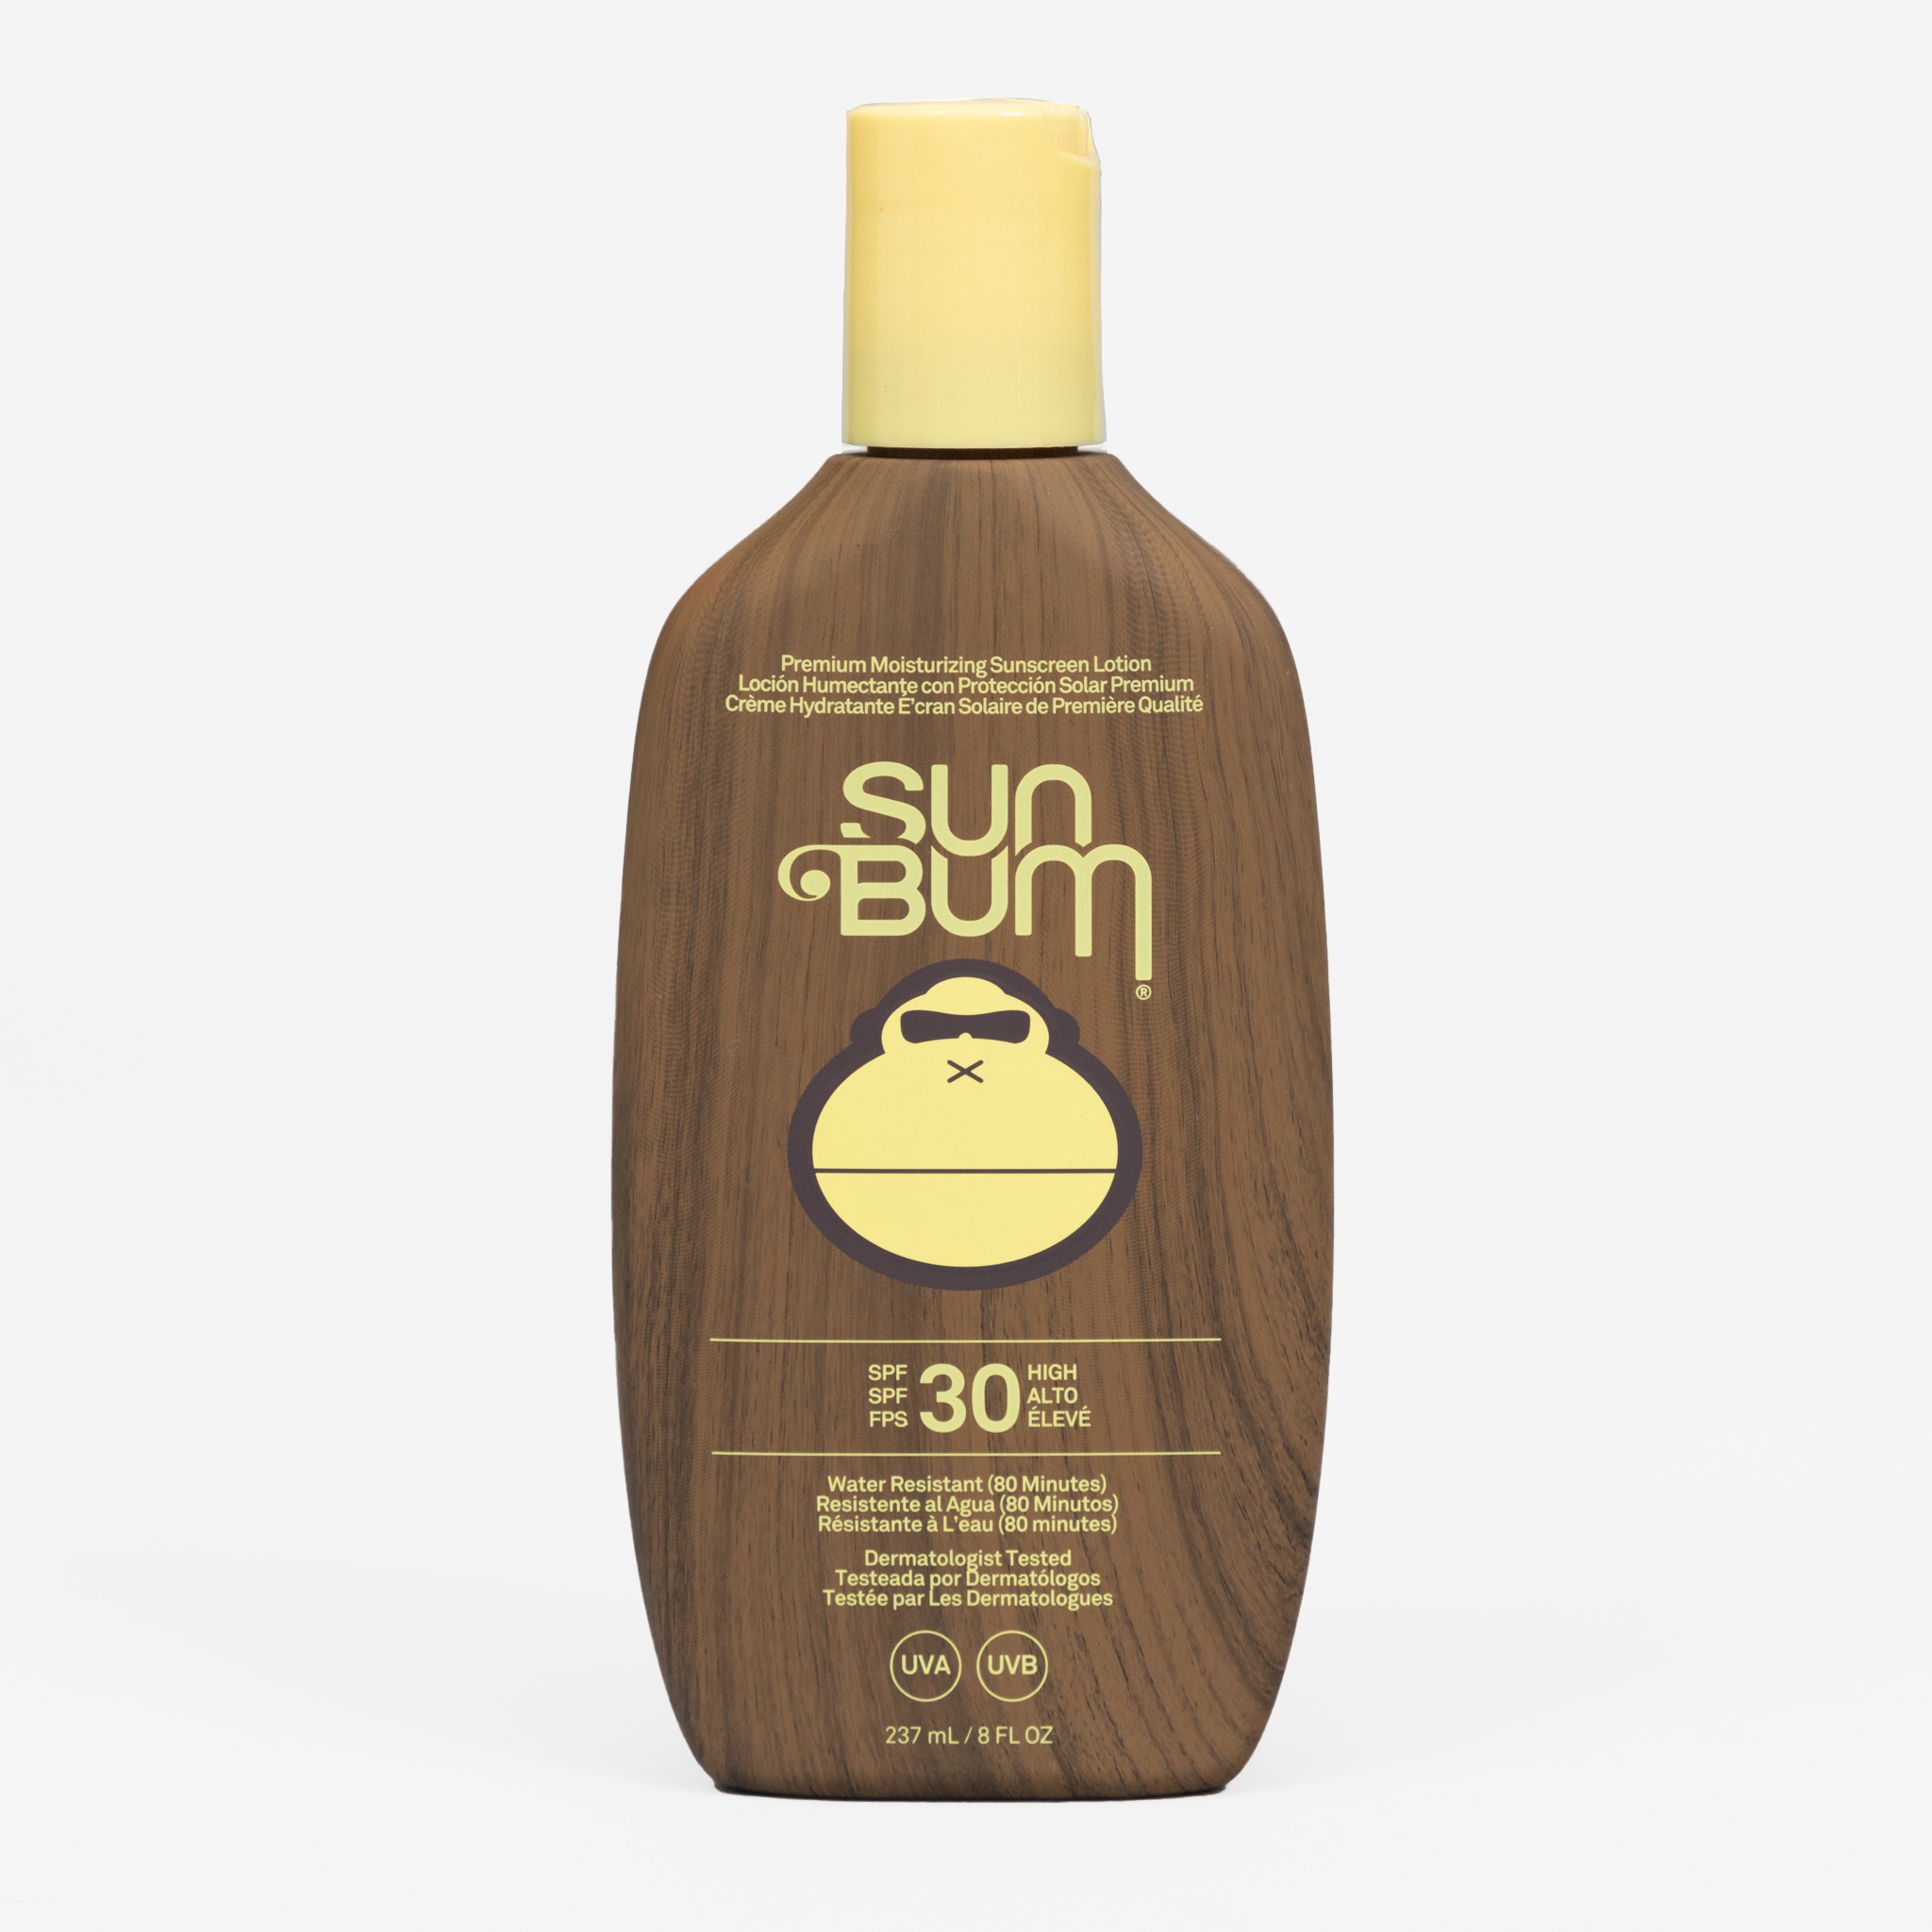 SUN BUM SPF 30 Original Sunscreen Lotion 237ml